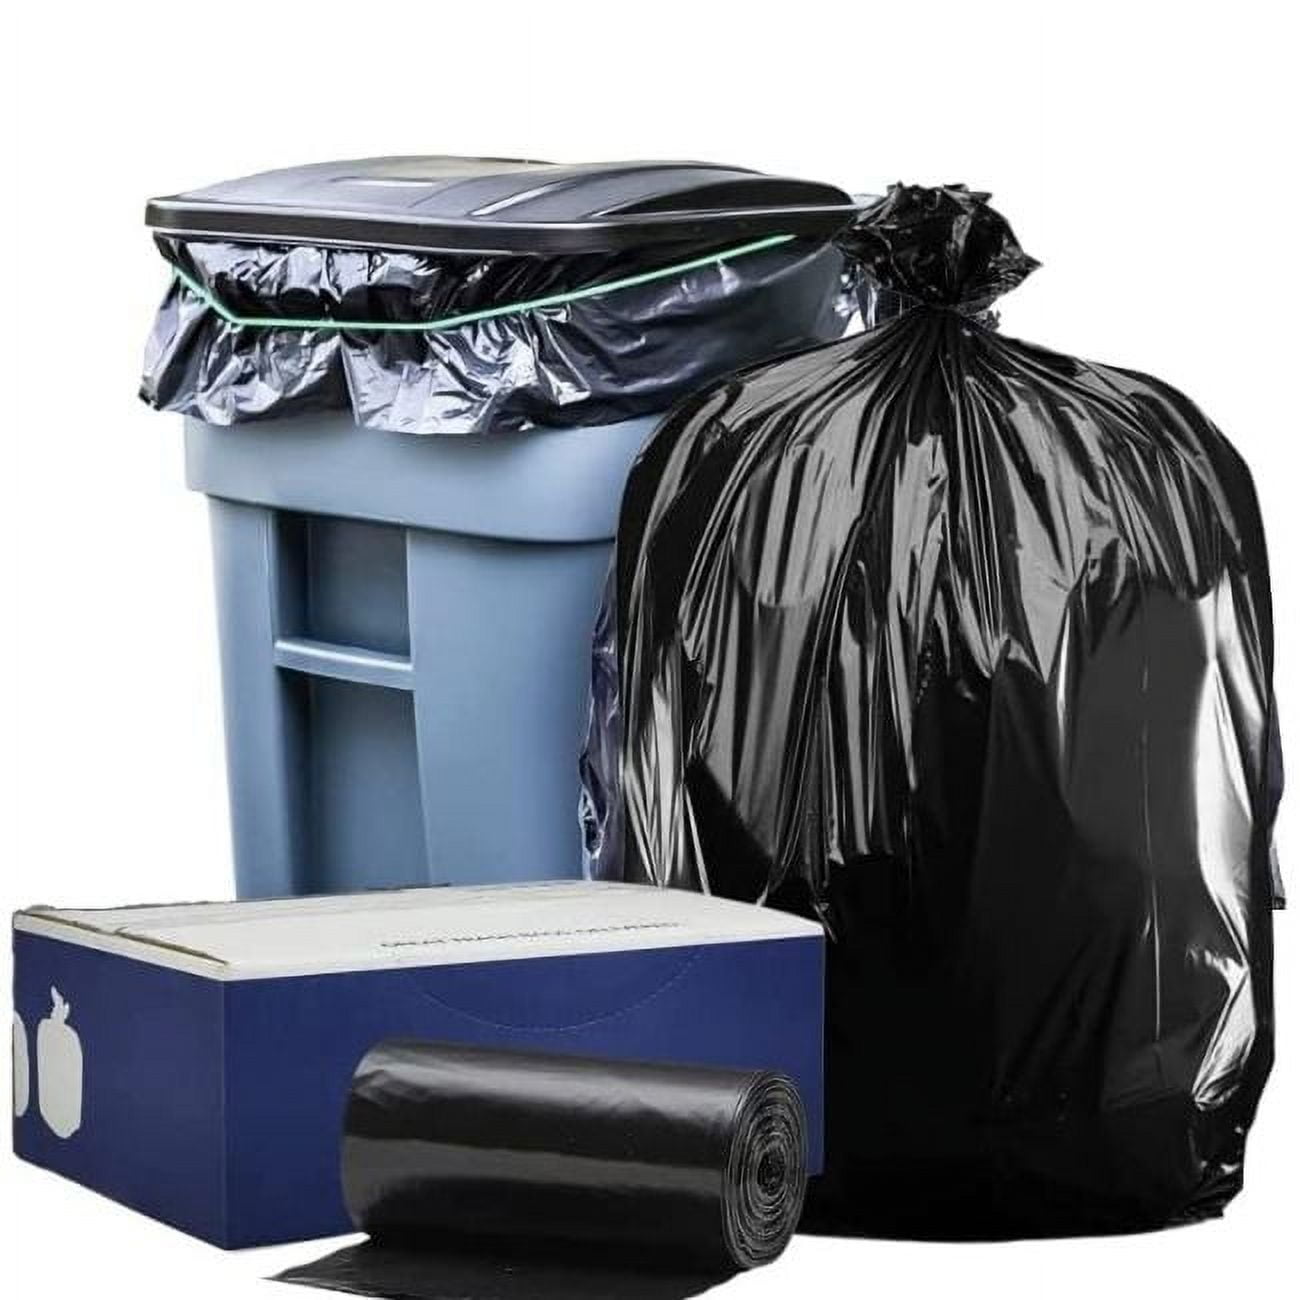 ToughBag 55 Gallon Trash Bags, 35 x 55 Large Industrial Black Trash Bags  (50 COUNT) - 55